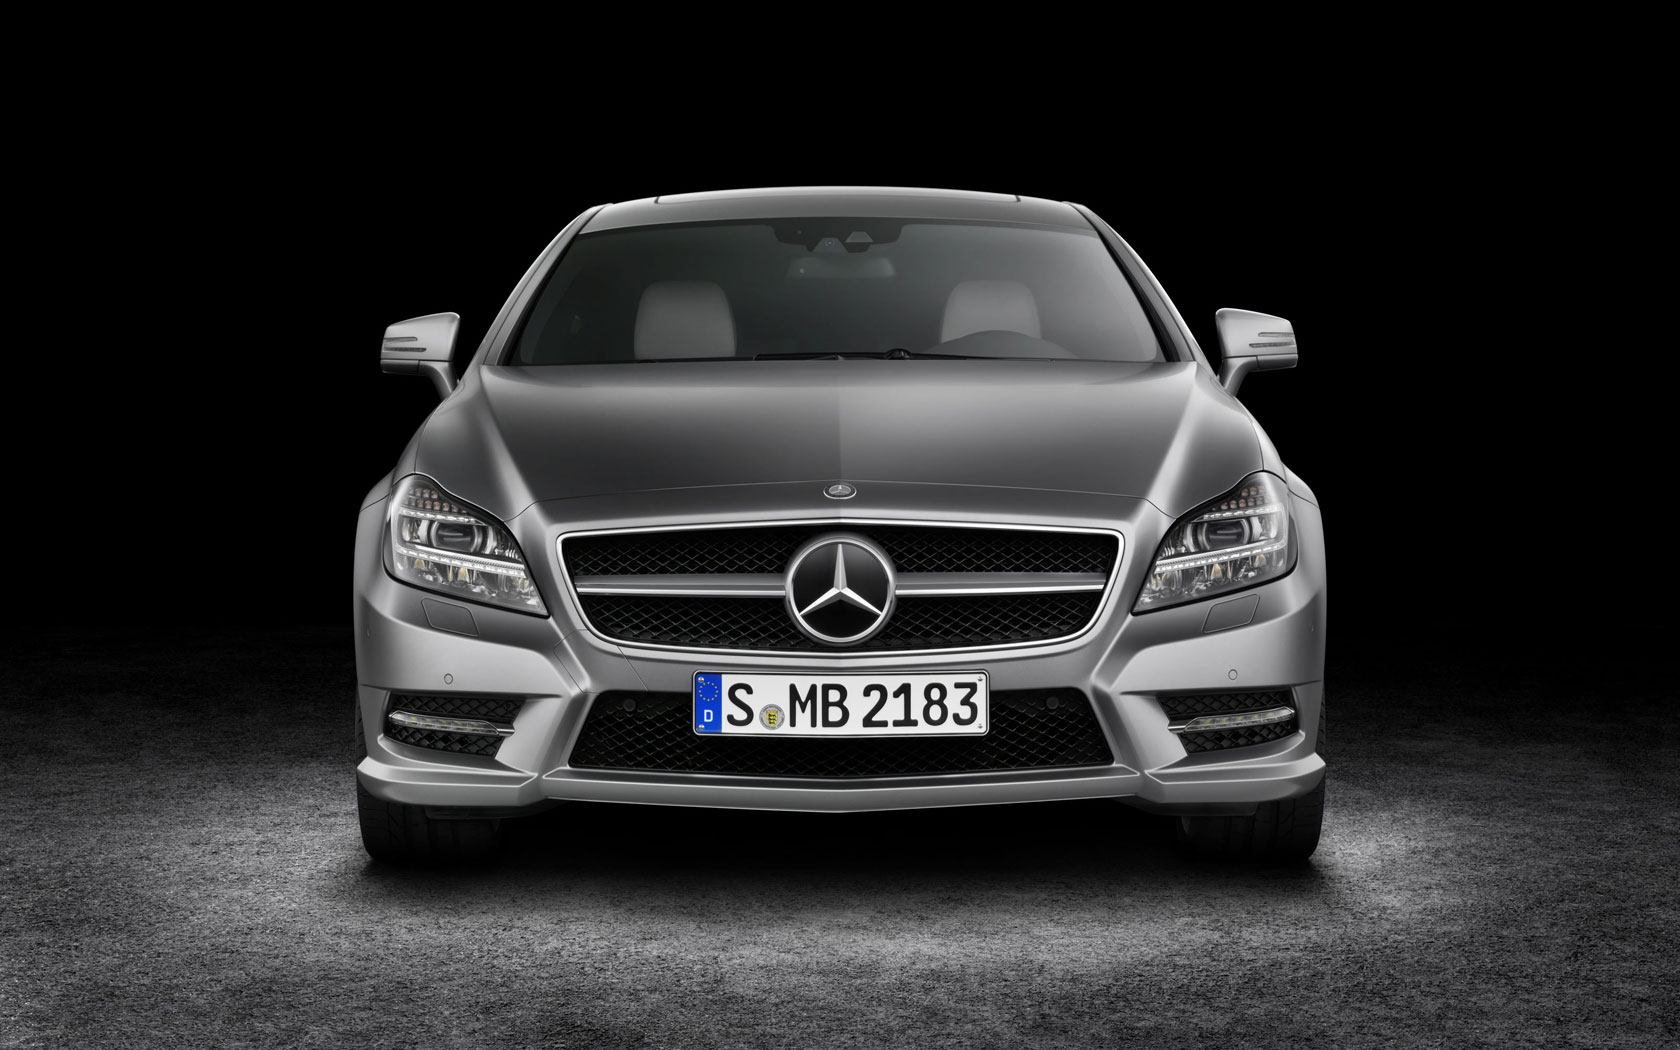  Mercedes CLS Shooting Brake (2012-2014)